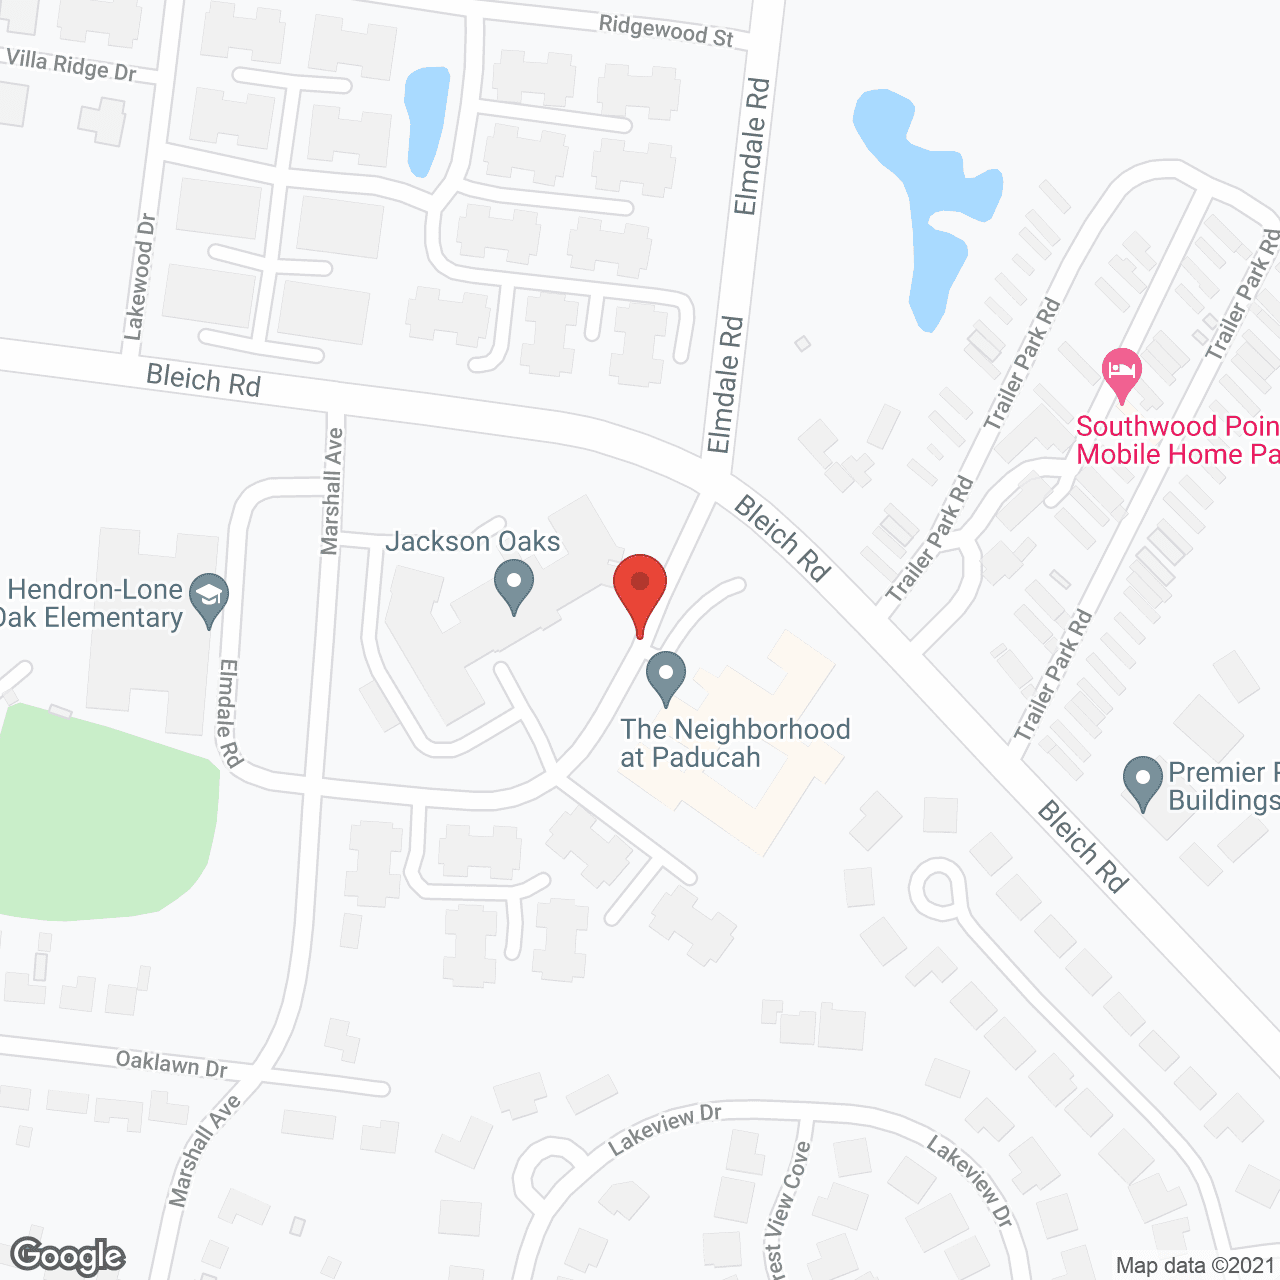 The Neighborhood at Paducah in google map